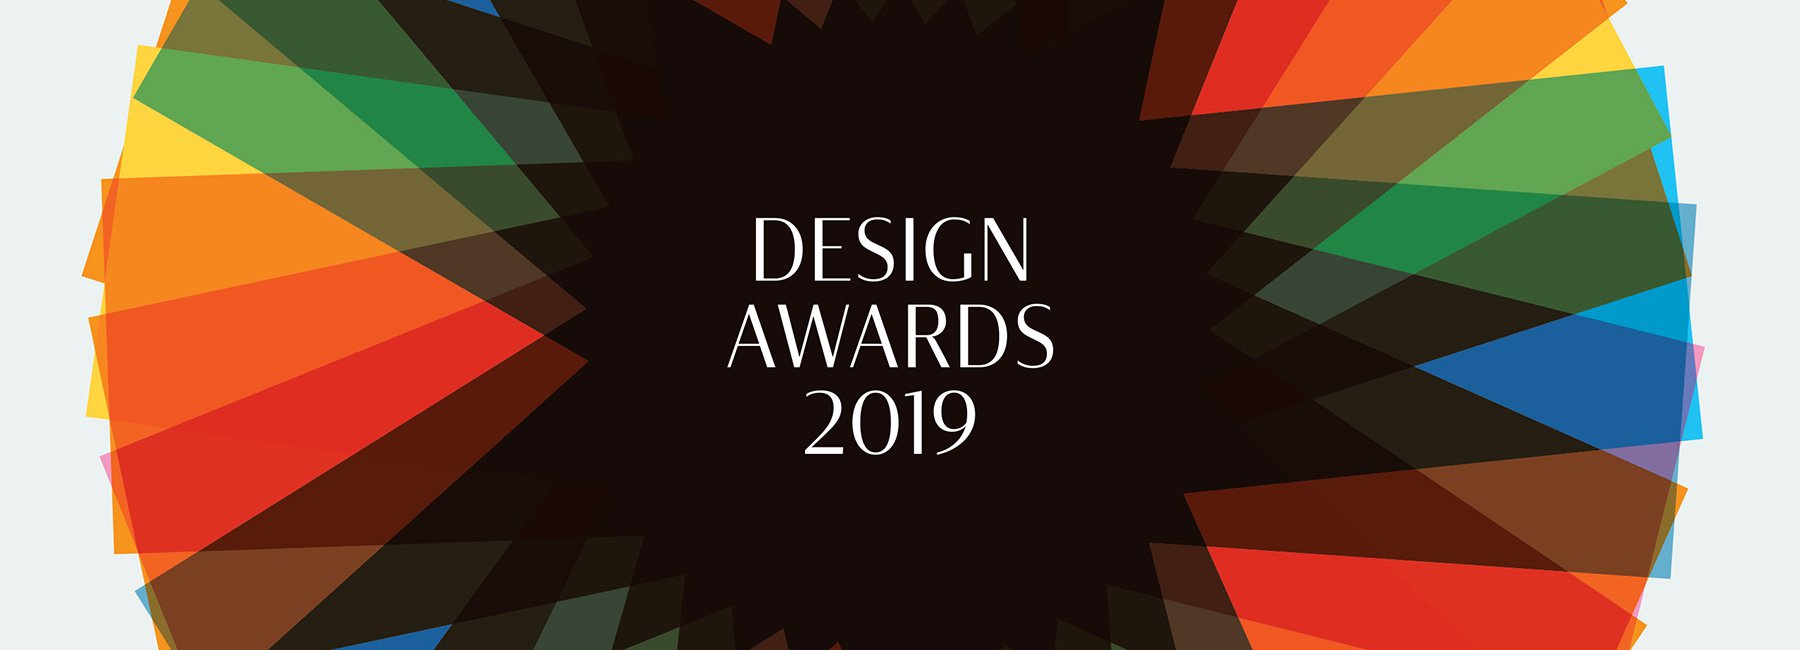 Wallpaper* Design Awards - Graphic Design Awards 2019 - HD Wallpaper 